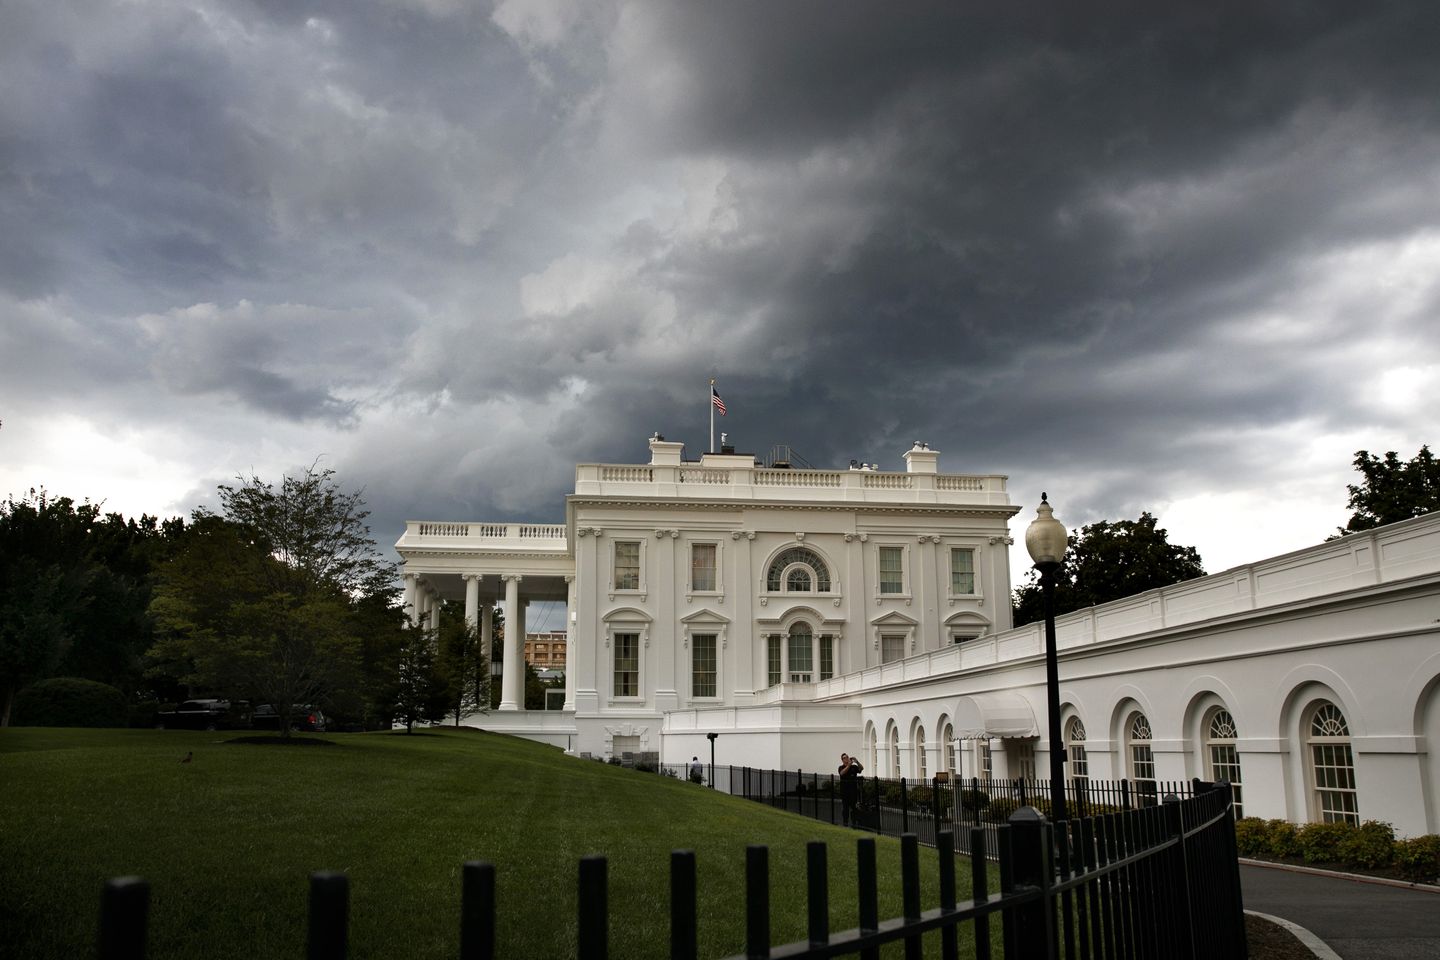 Lightning strike near White House critically injures 4